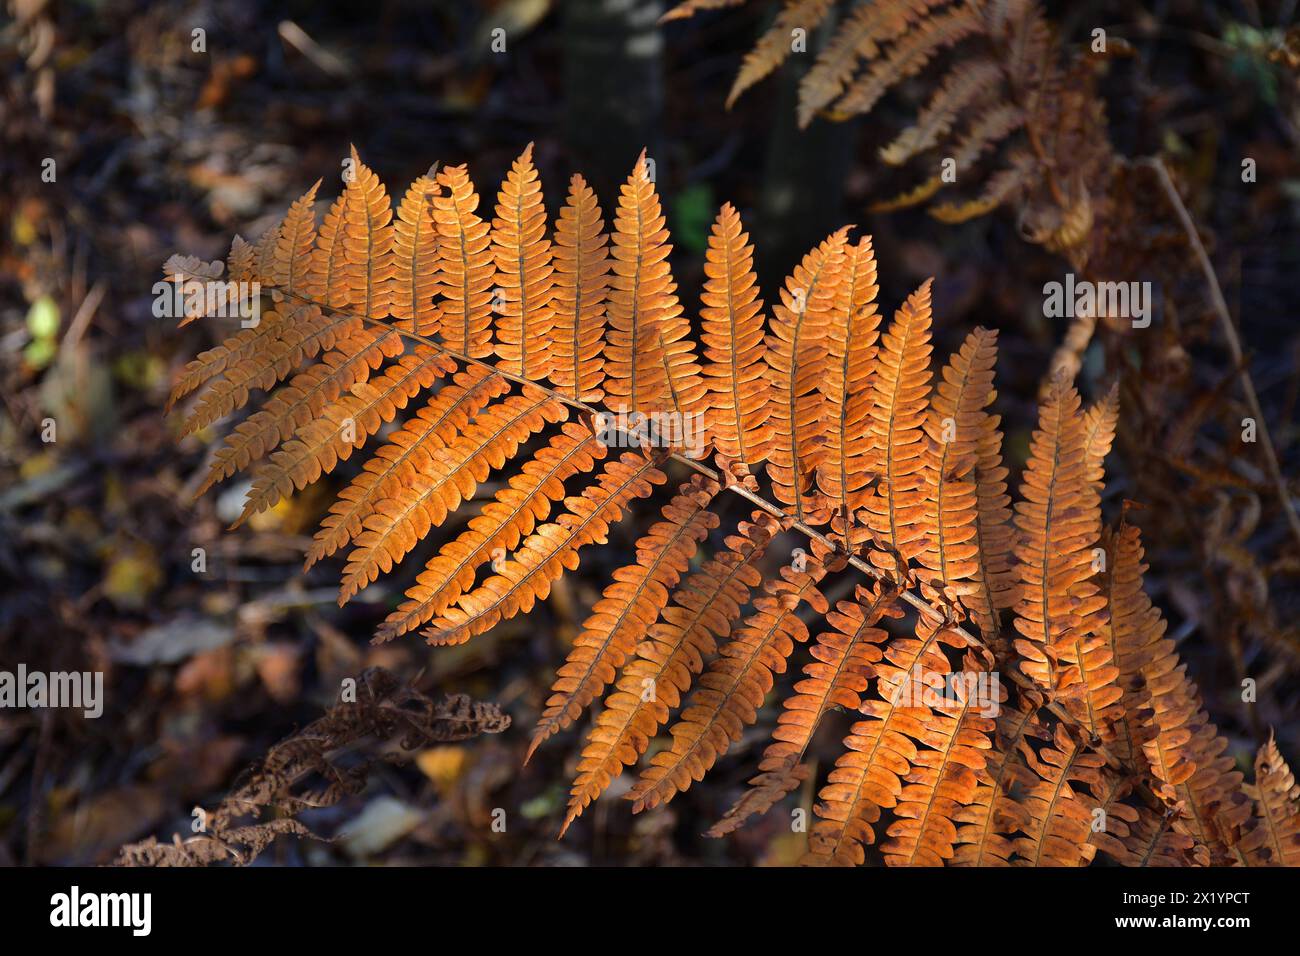 Commun lady fern with orange to brown leaves. Athyrium filix-femina in fall season. Stock Photo